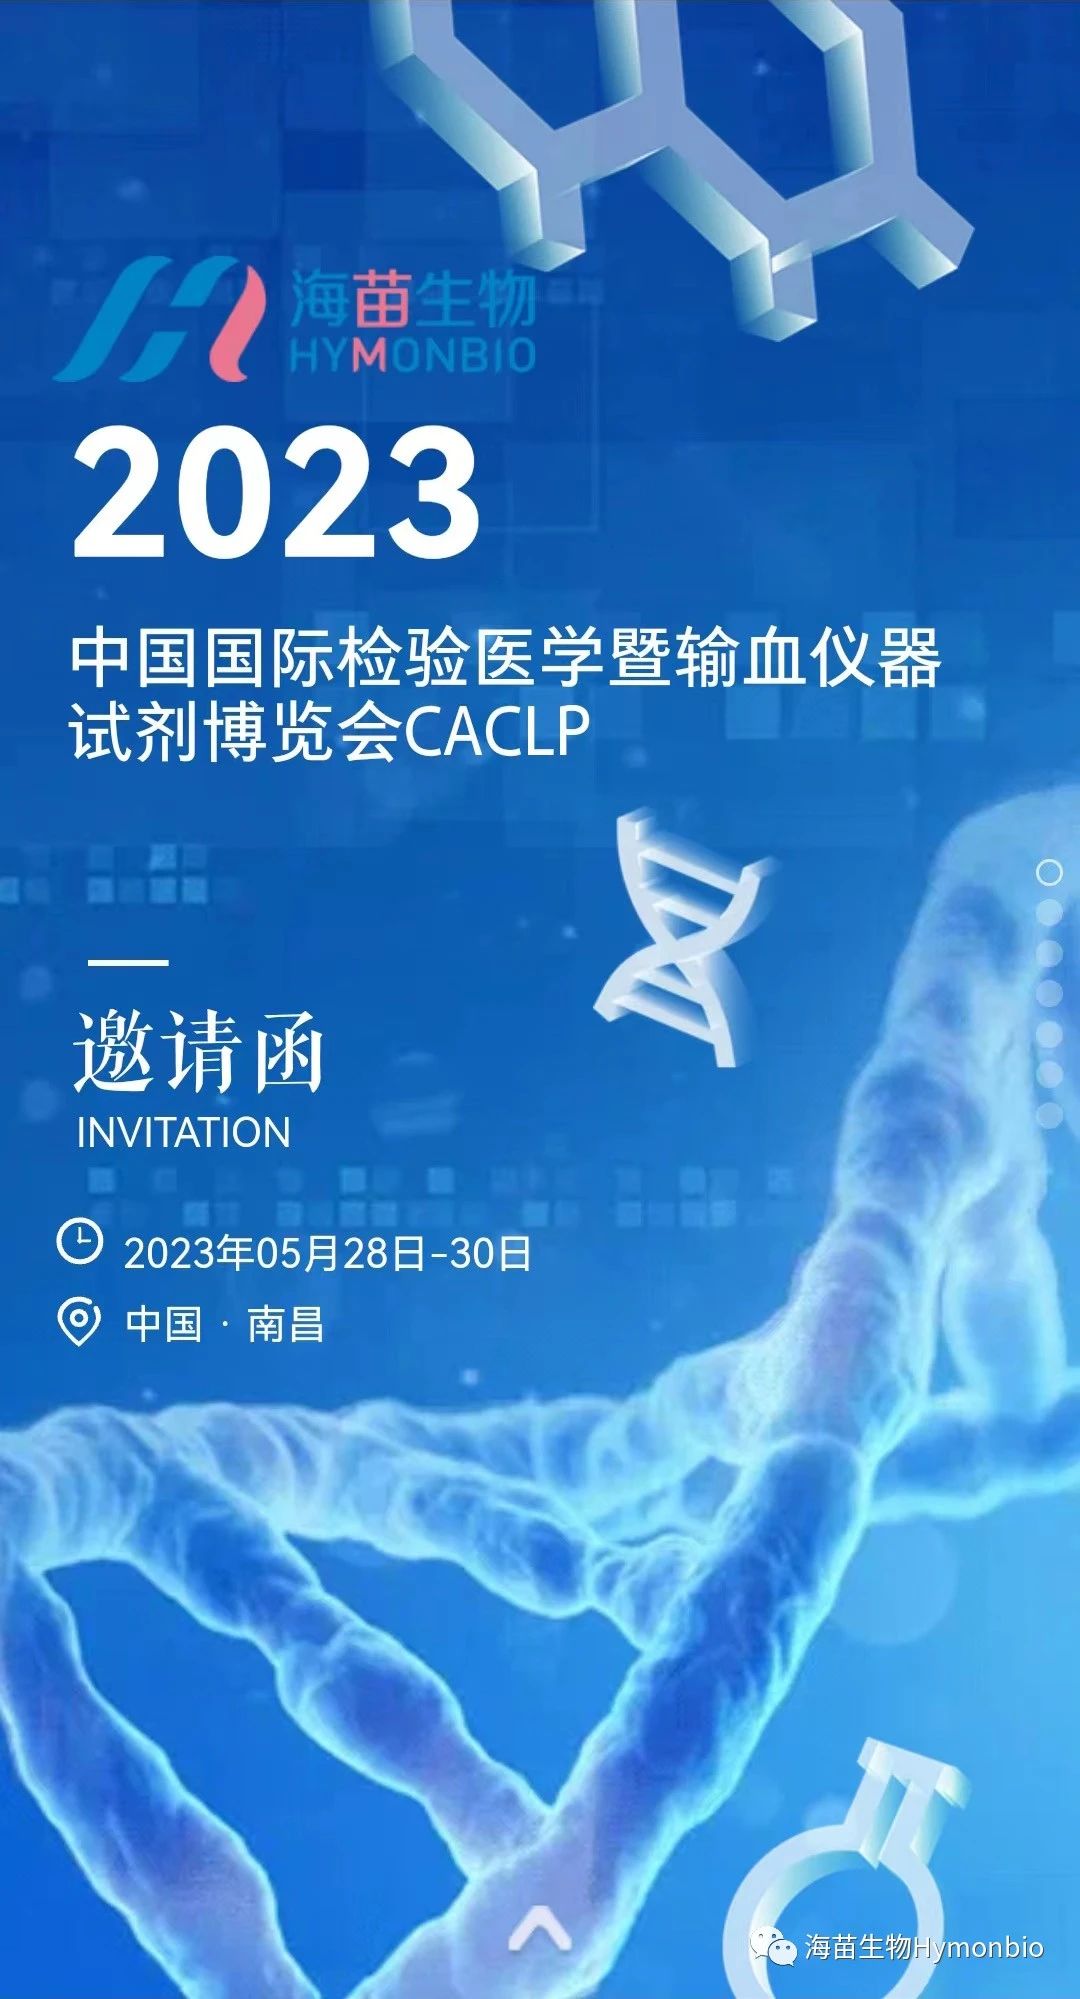 HymonBio приглашает вас на CACLP 2023 года в Наньчане